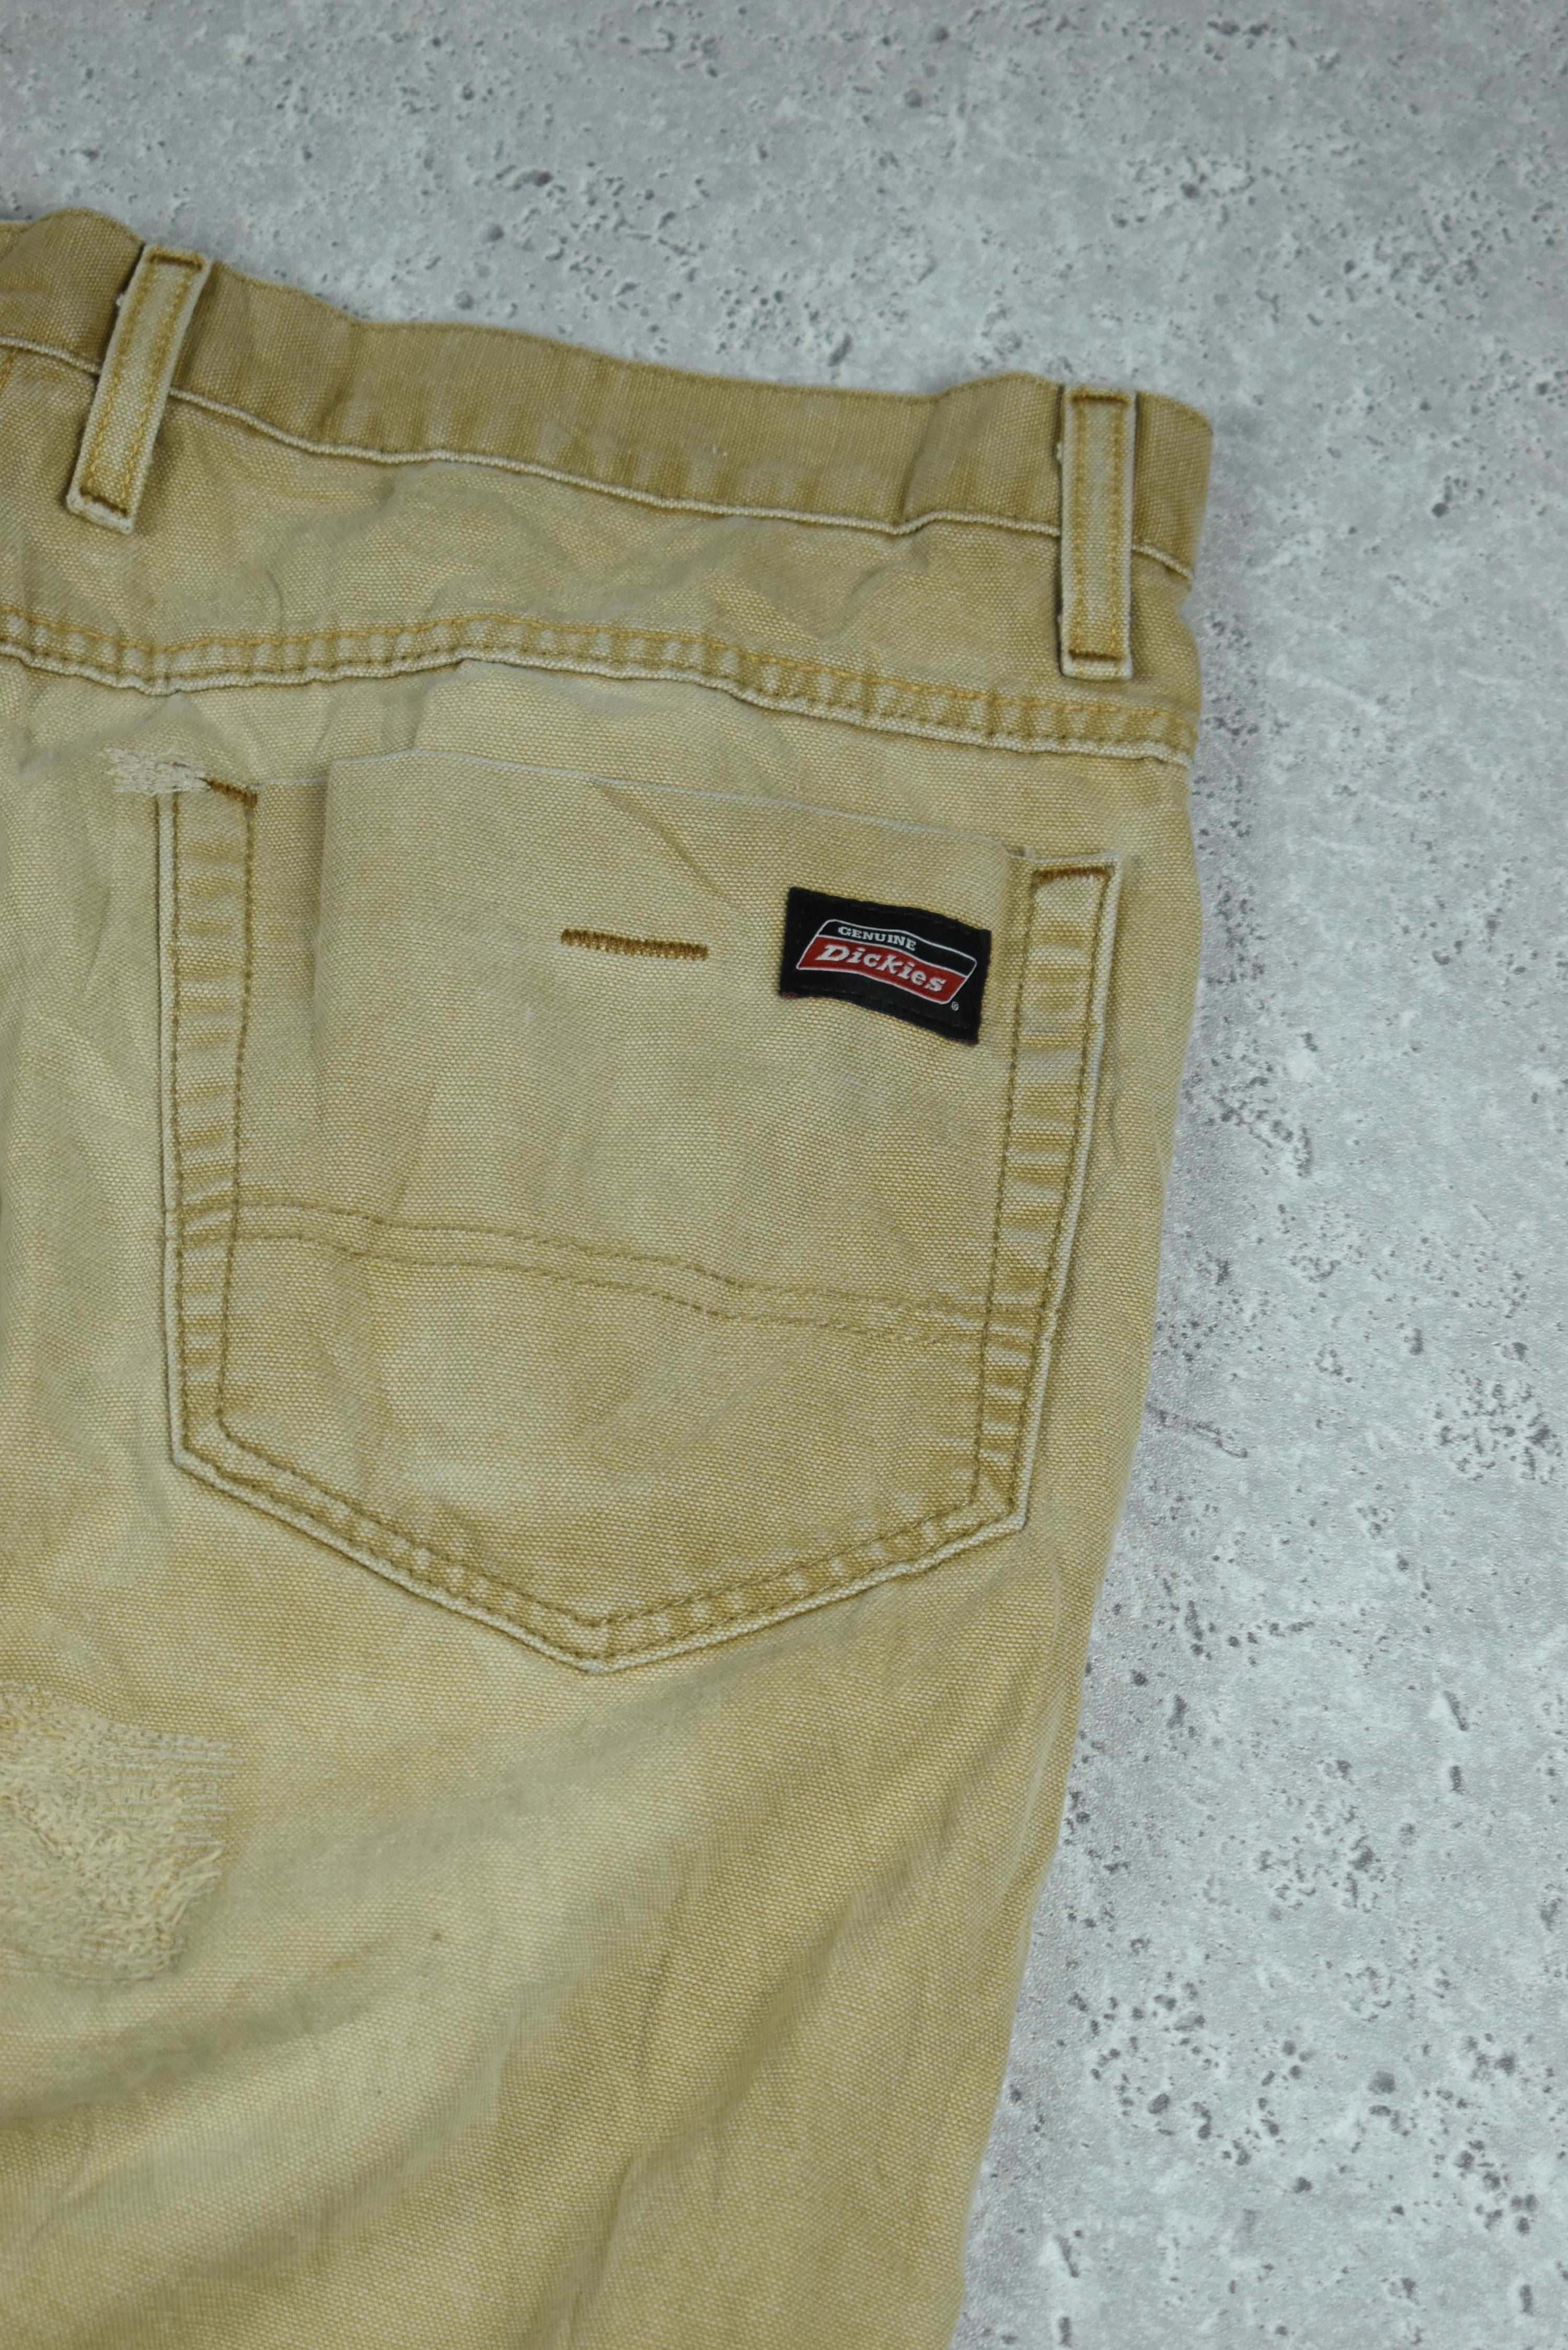 Vintage Dickies Relaxed Fit Workwear Pants Brown 36x30